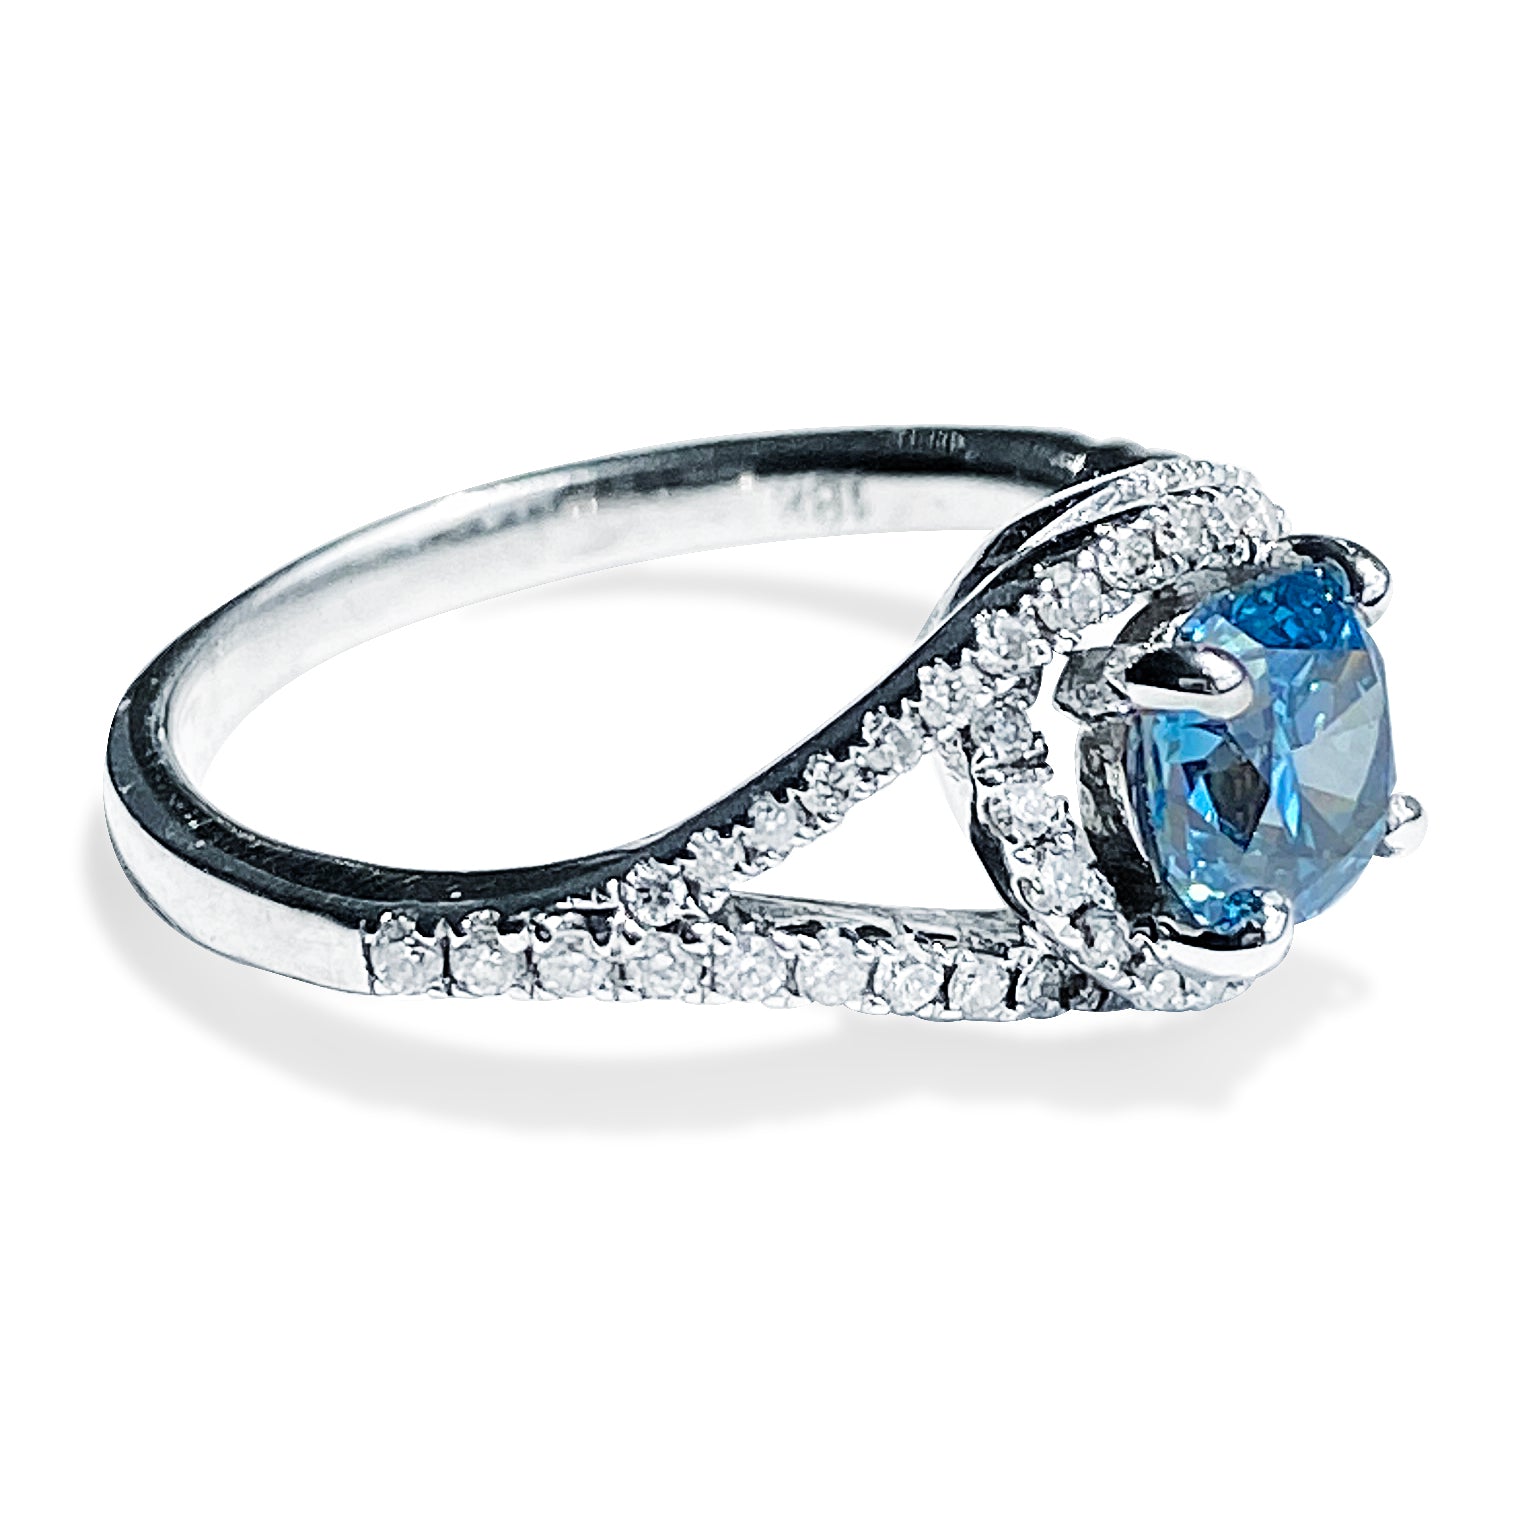 .72 Carat Fancy Blue Cushion Diamond Ring